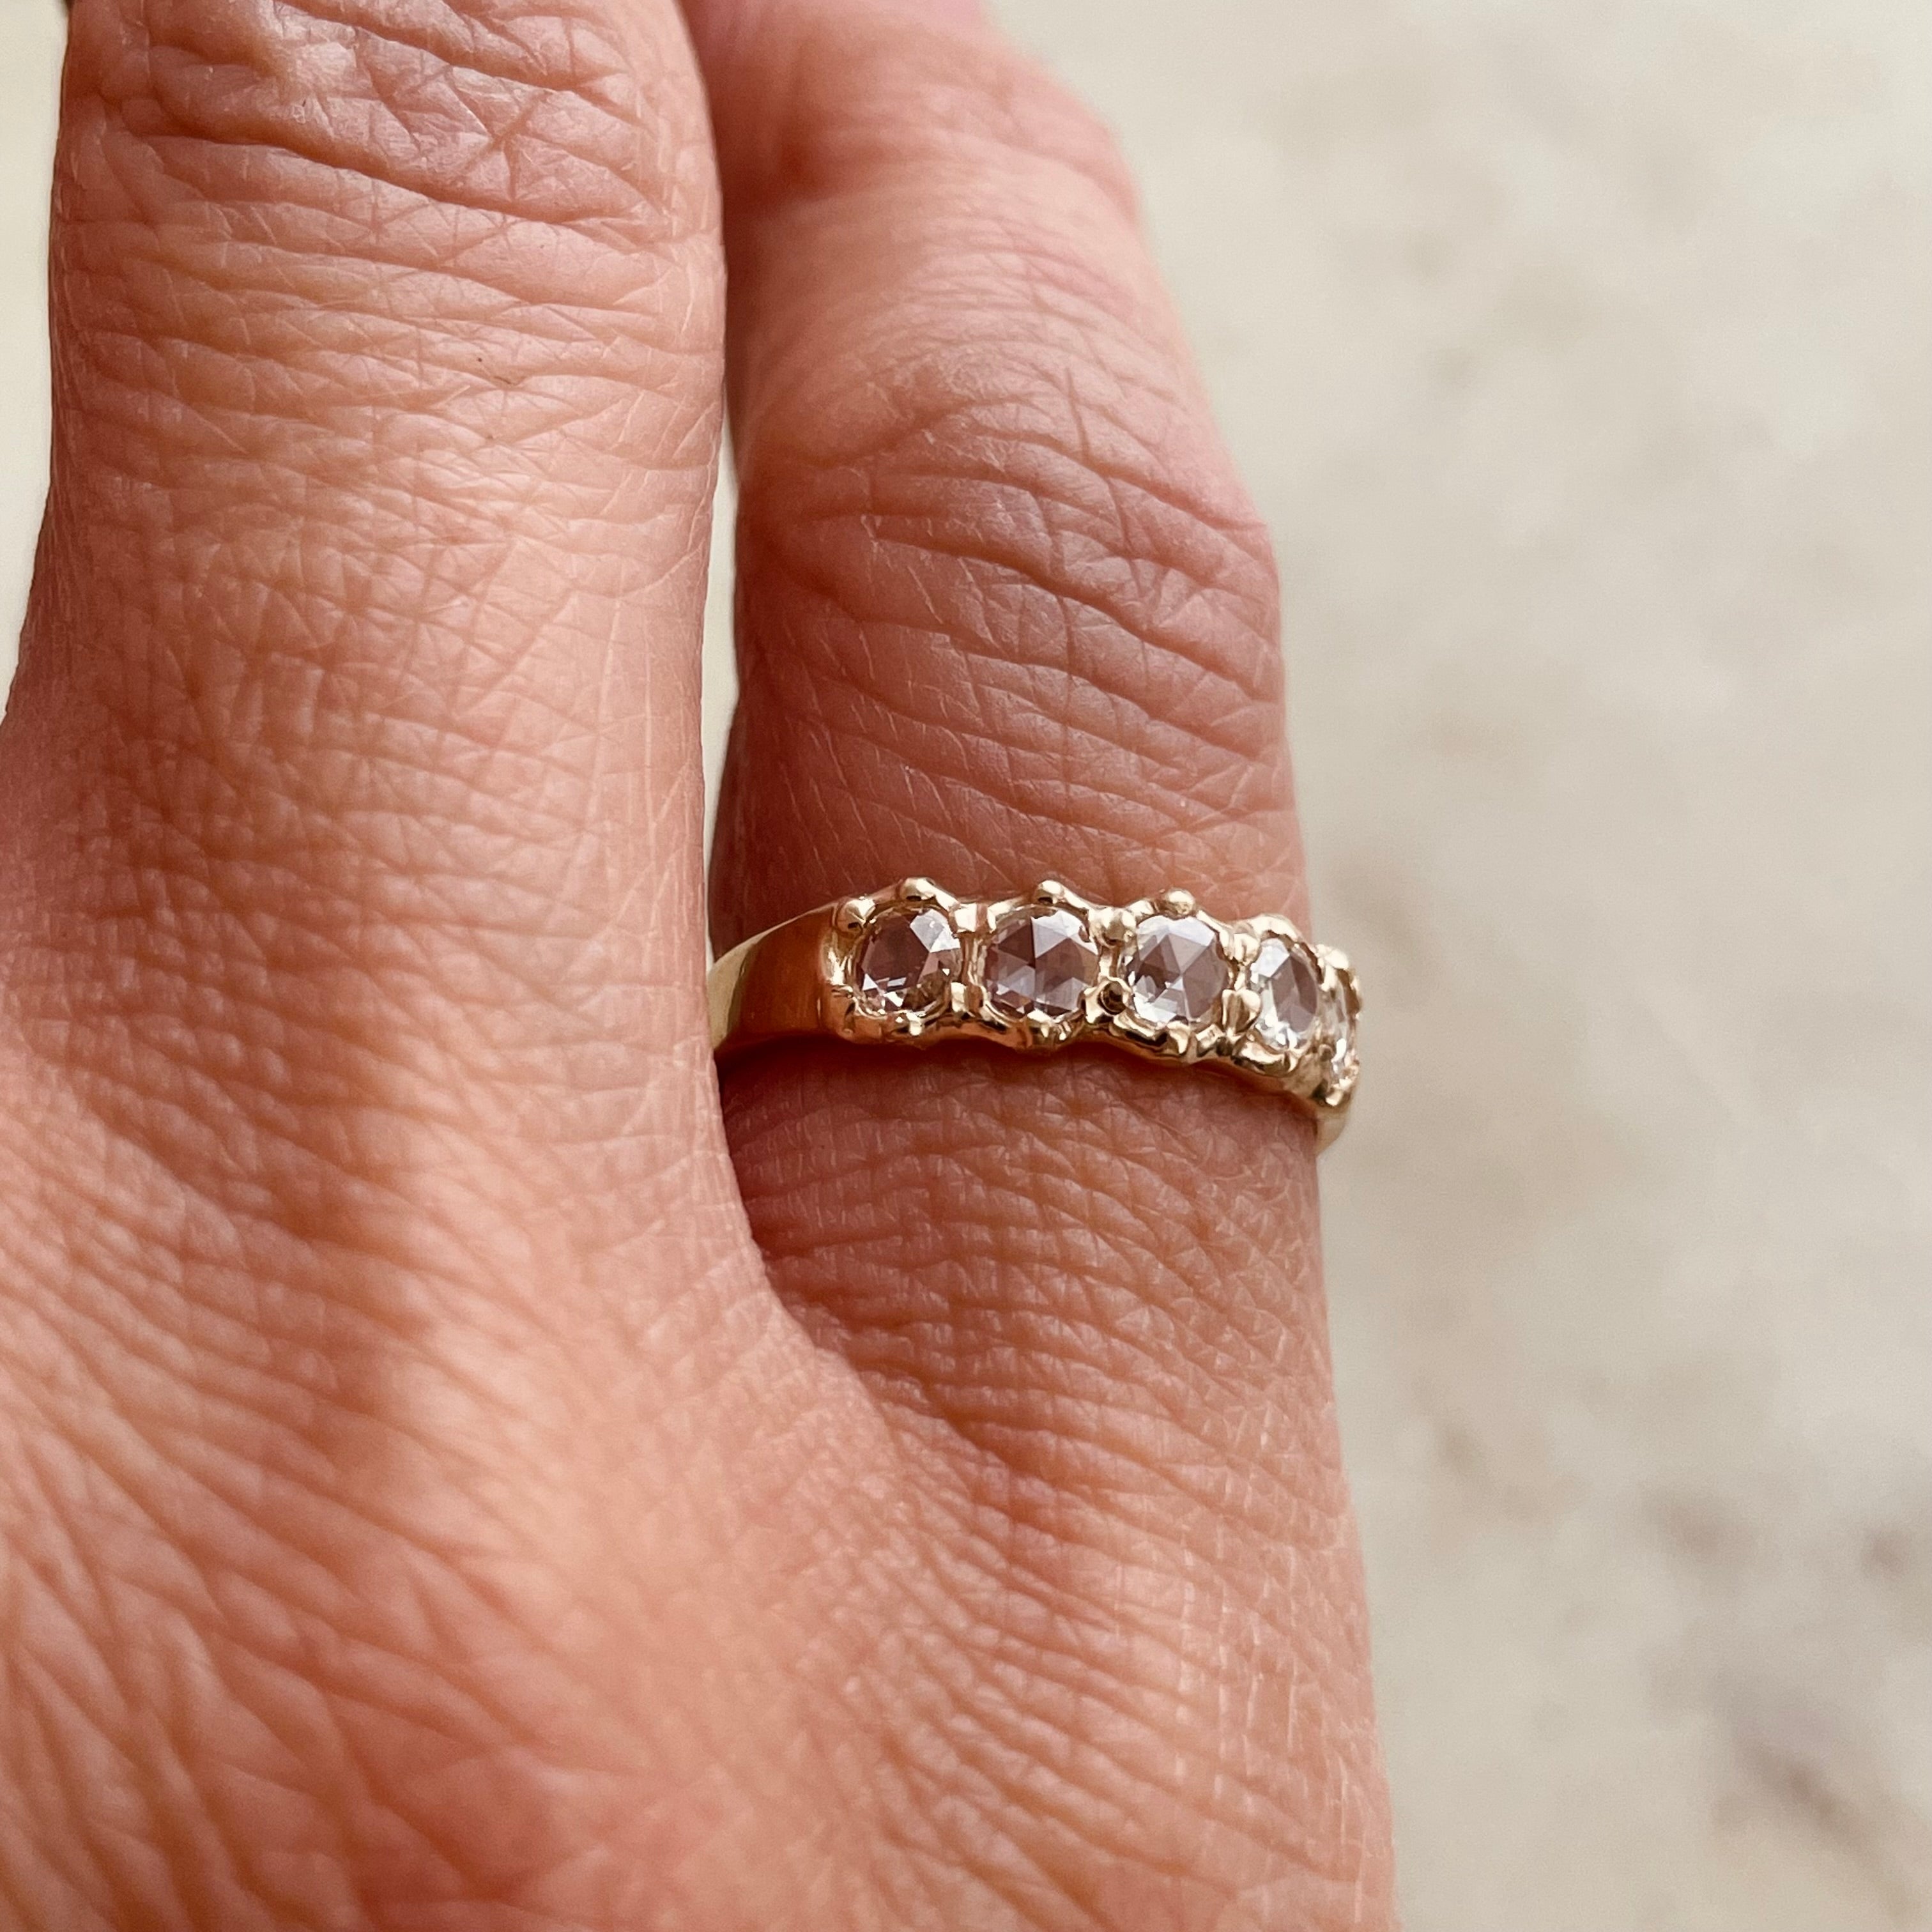 Tiny Stone Ring, Gold or Rose Gold | Glamrocks Jewelry